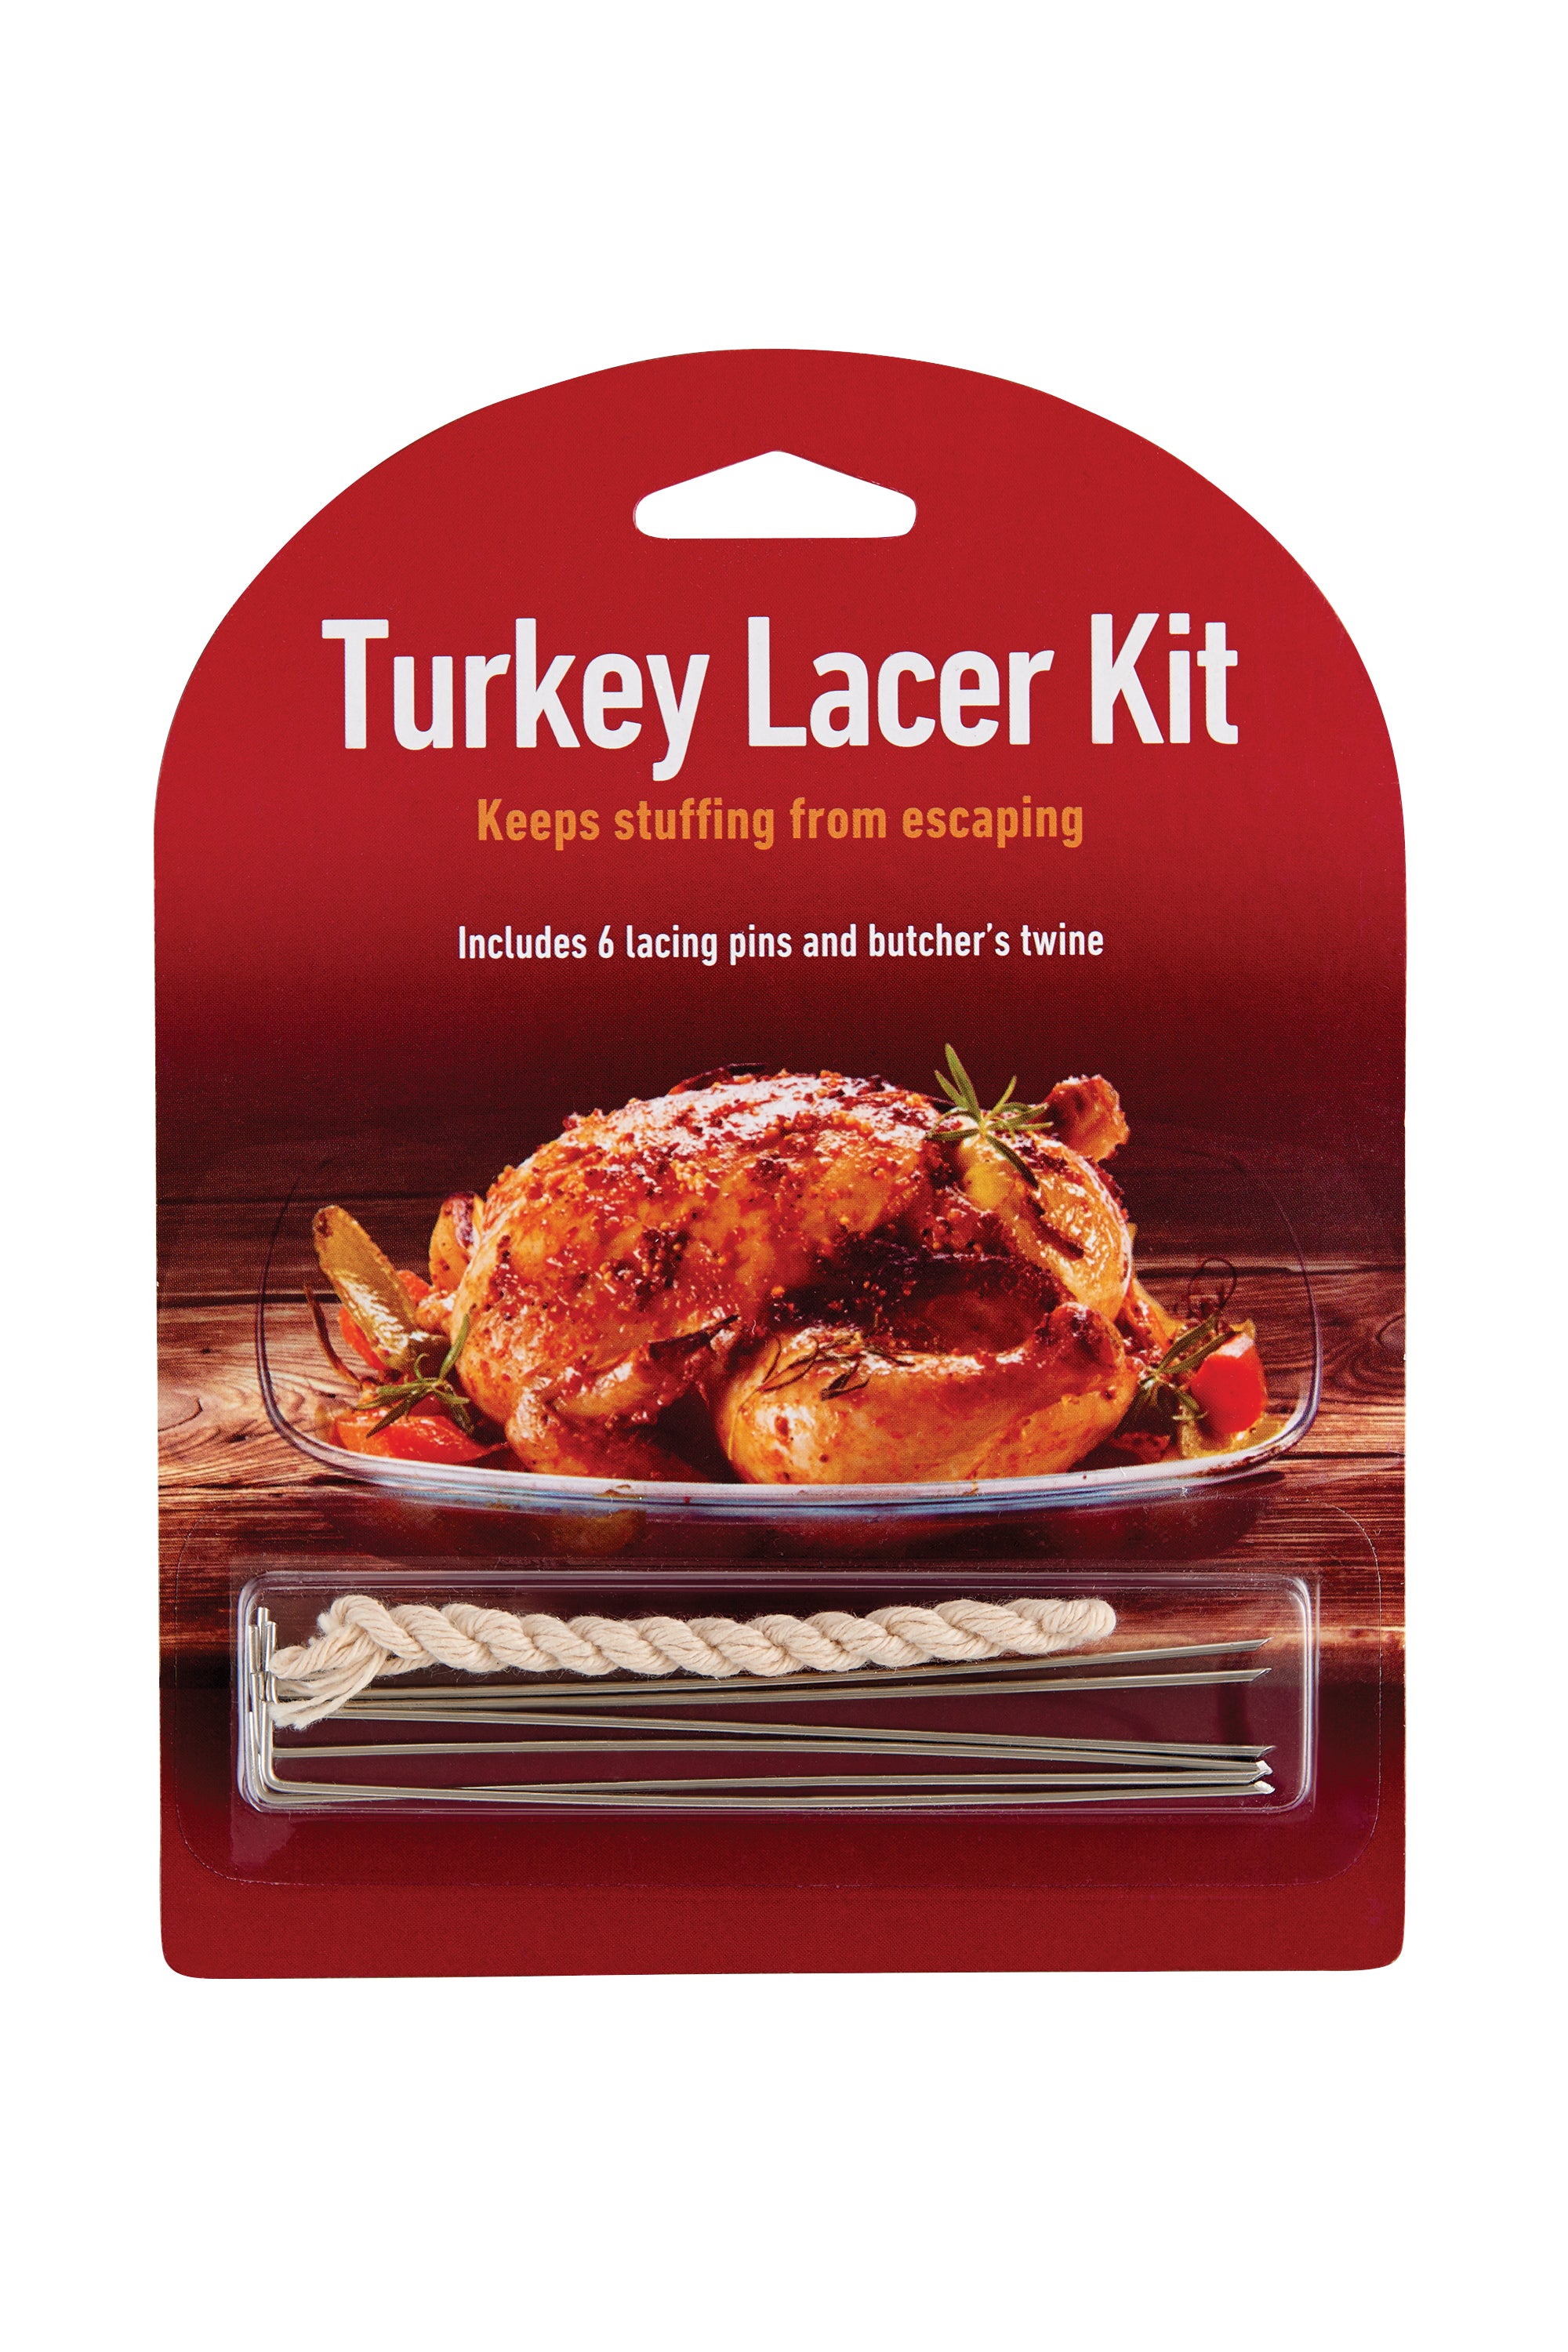 Turkey Lacer Kit